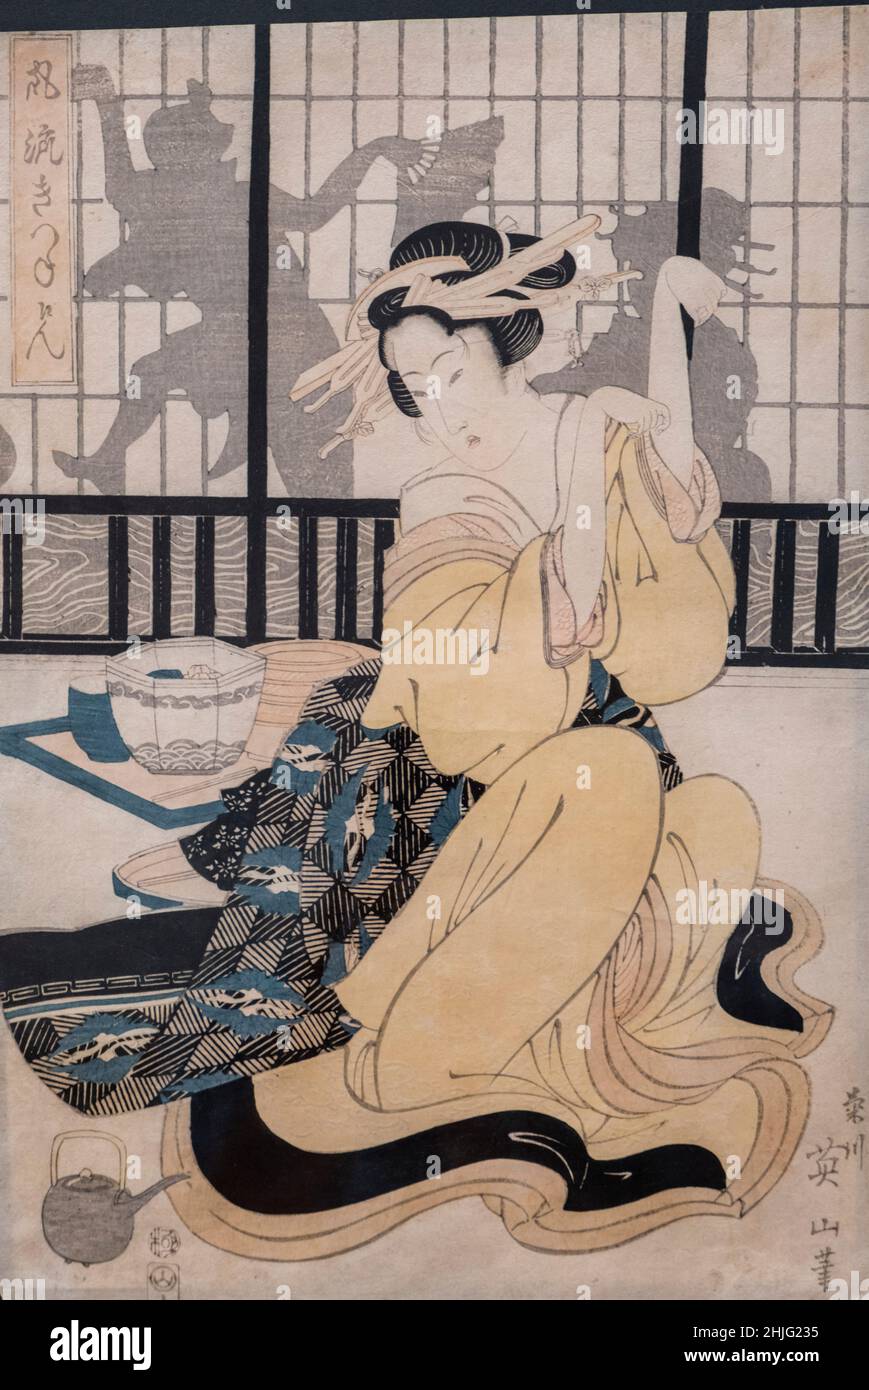 Furyu kitsune ken (le jeu de renard élégant), gravure en bois sur papier, 1824, Kikugawa Eizan hitsu, Museo de Bellas Artes, Bilbao, Espagne Banque D'Images